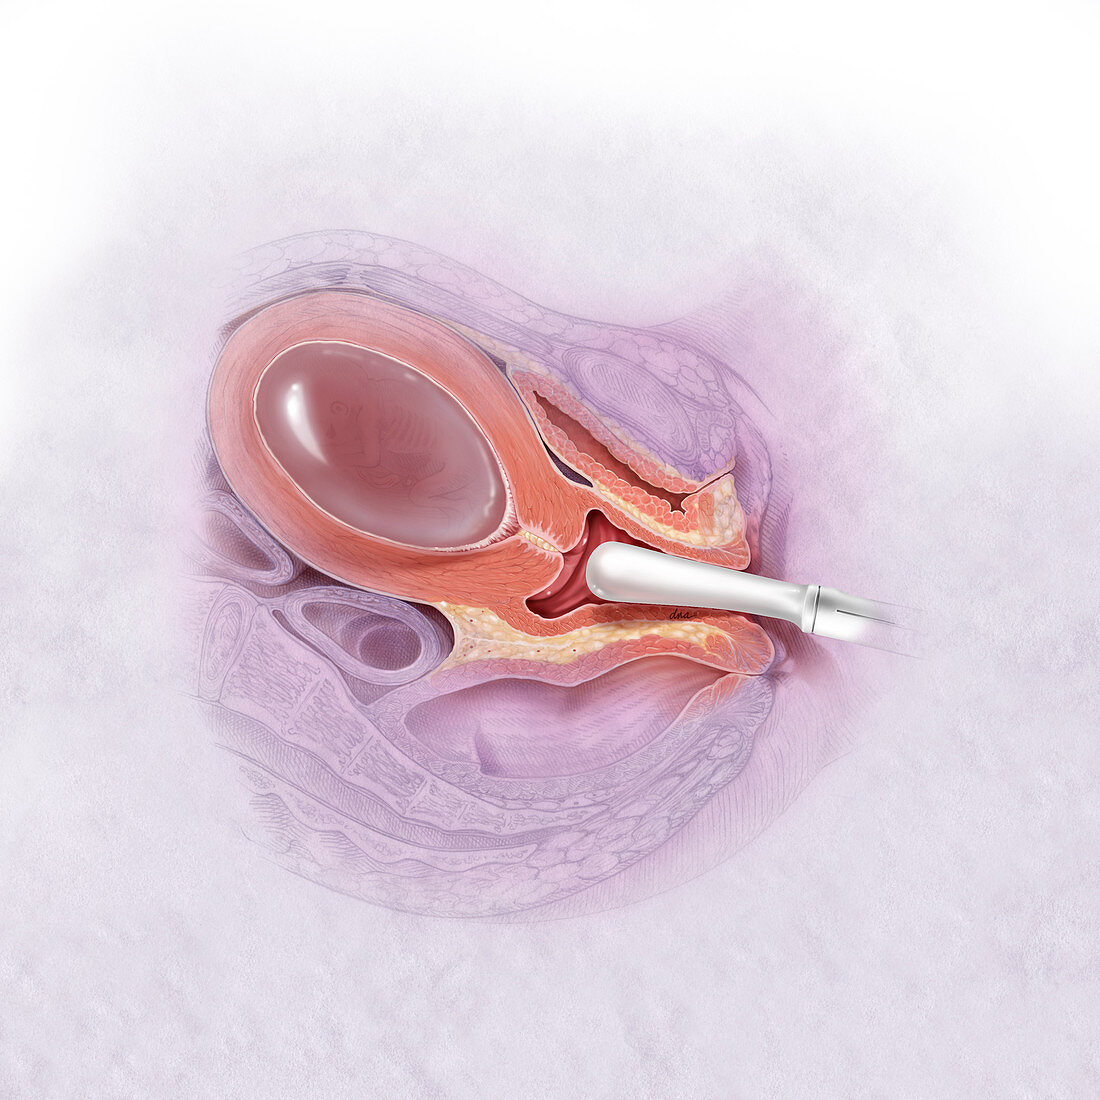 Ultrasound Screening for Short Cervix